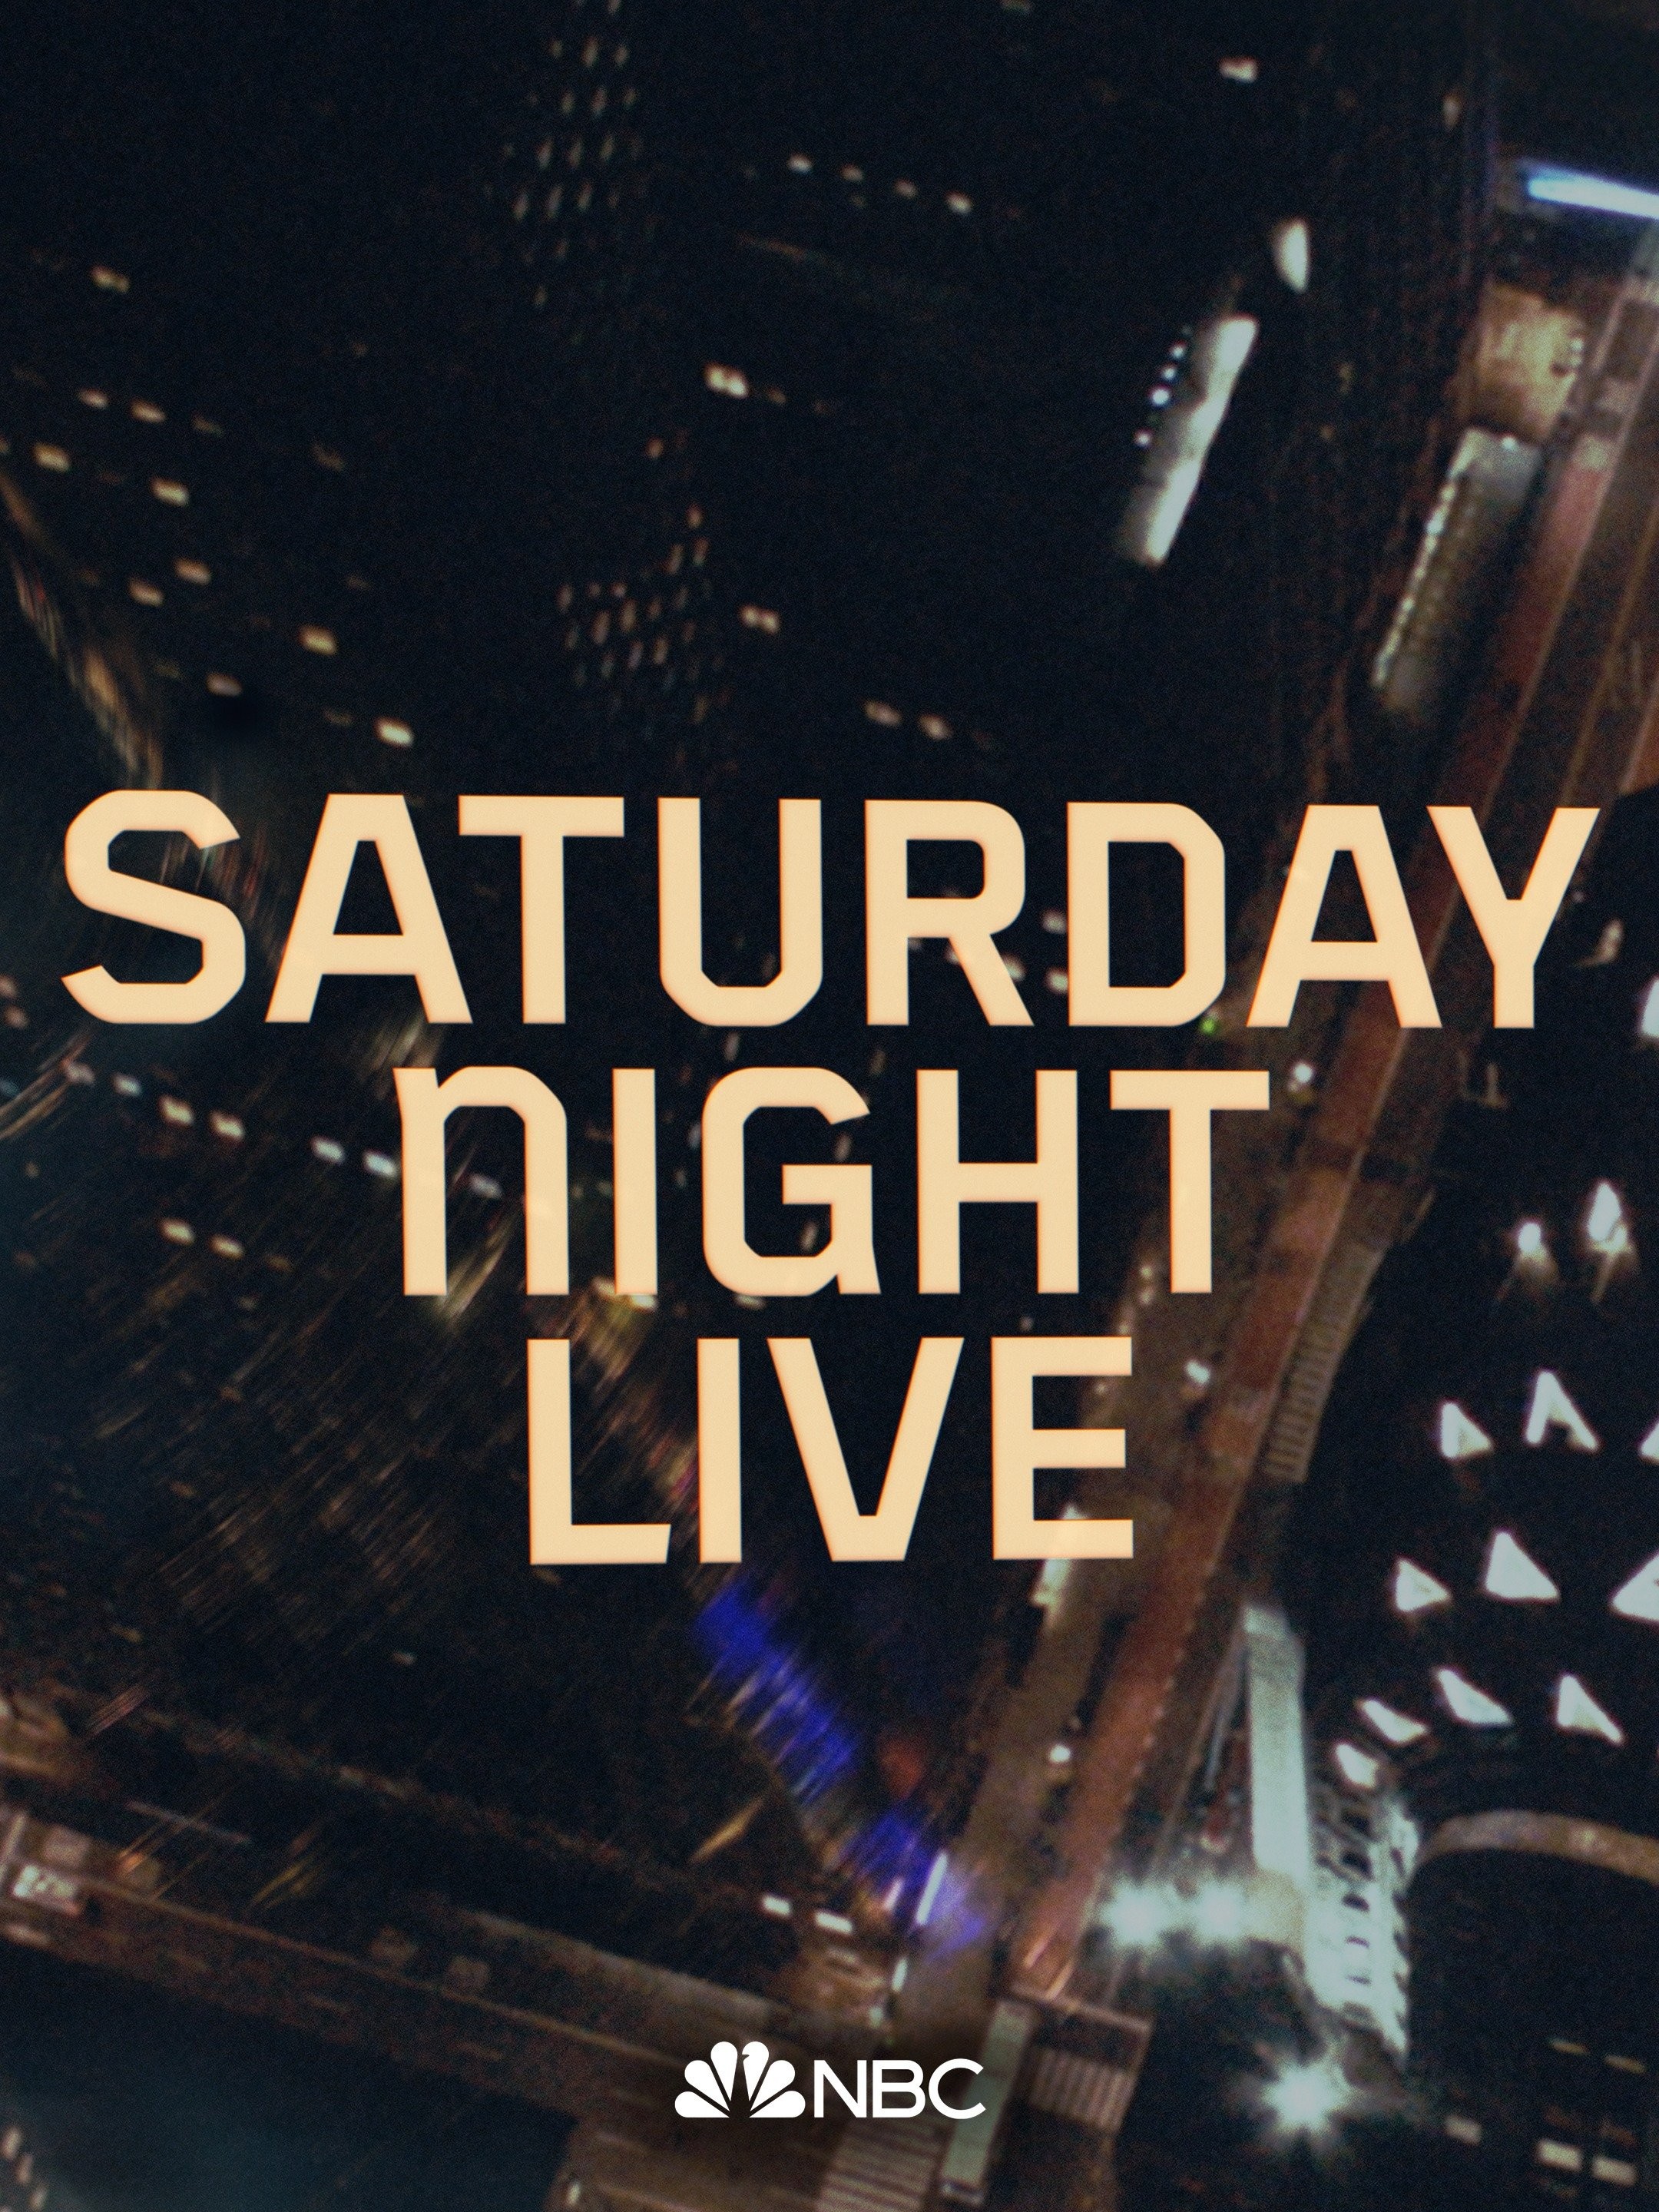 Michael B. Jordan Scores an Abs-olute Win as 'Saturday Night Live' Host